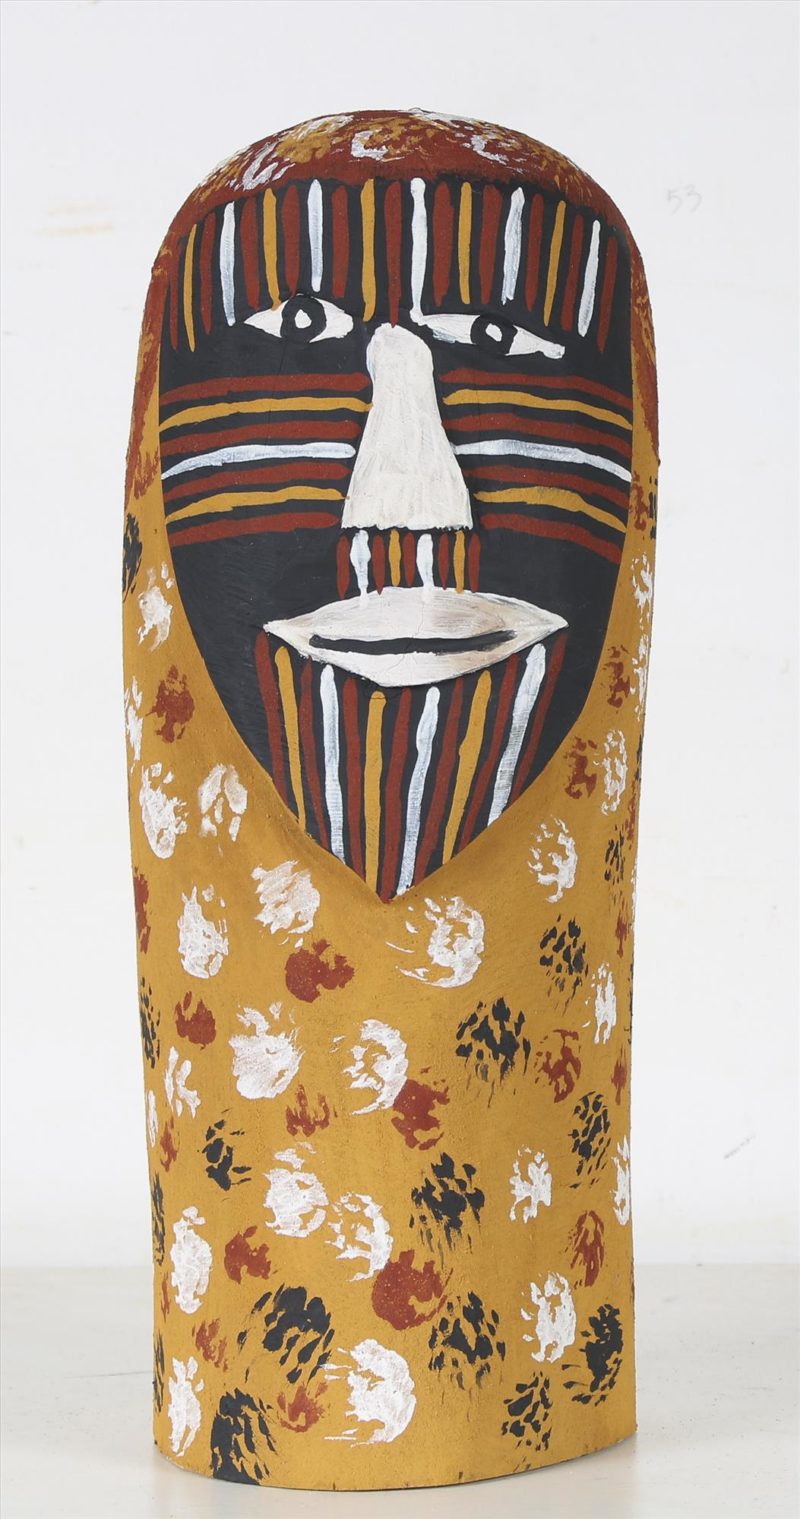 Tiwi Totems - Ironwood Carving - Walter Brooks